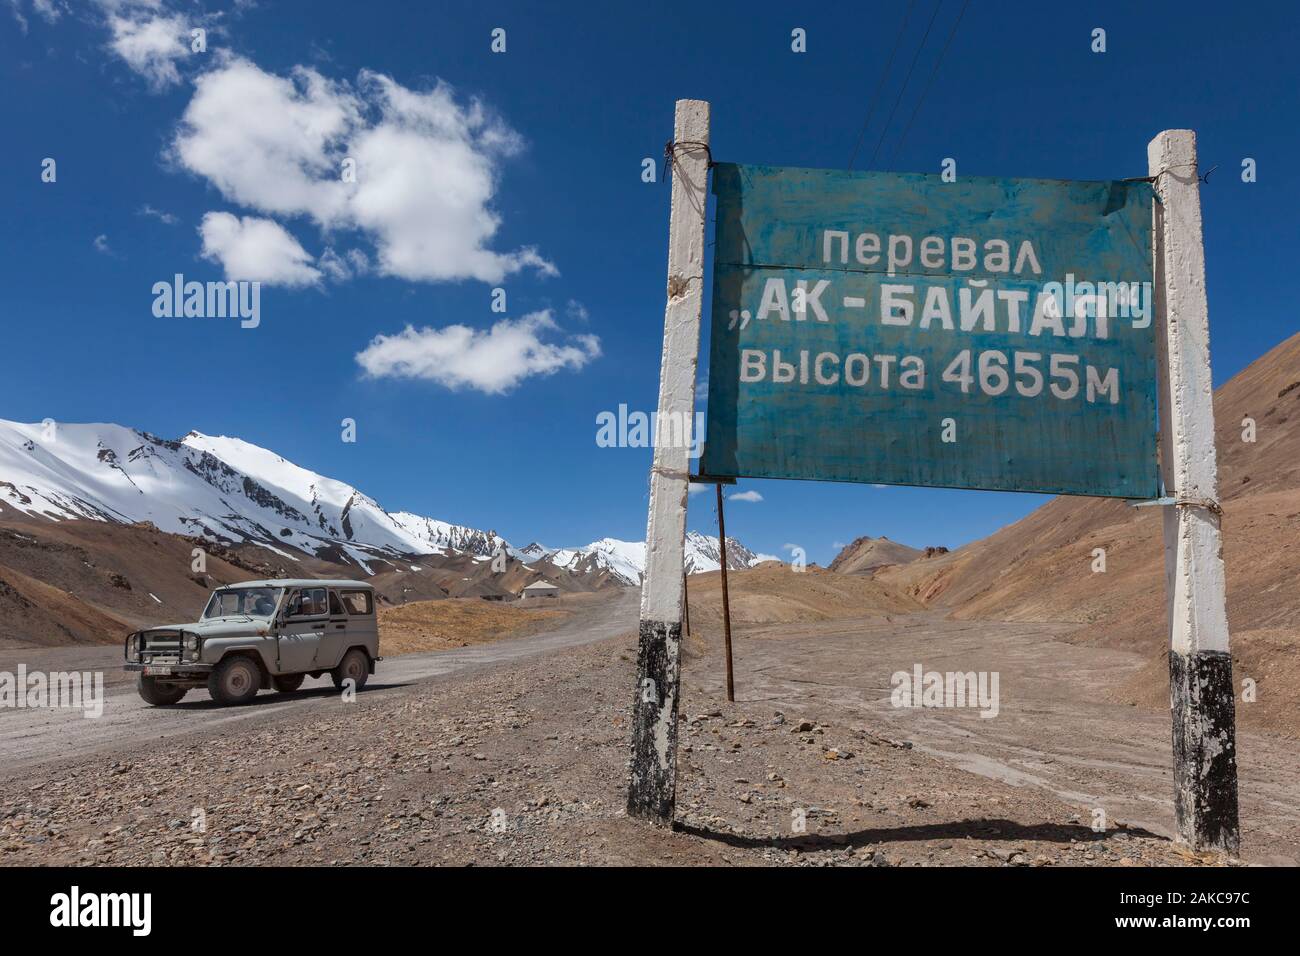 Tajikistan, Gorno-Badakhshan Autonomous Region, Ak-Baital Pass, altitude 4655m, Pamir Highway, Tajik National Park and Pamir Mountains, UNESCO World Heritage Site, track, jeep and Cyrillic sign announcing the altitude of the pass Stock Photo